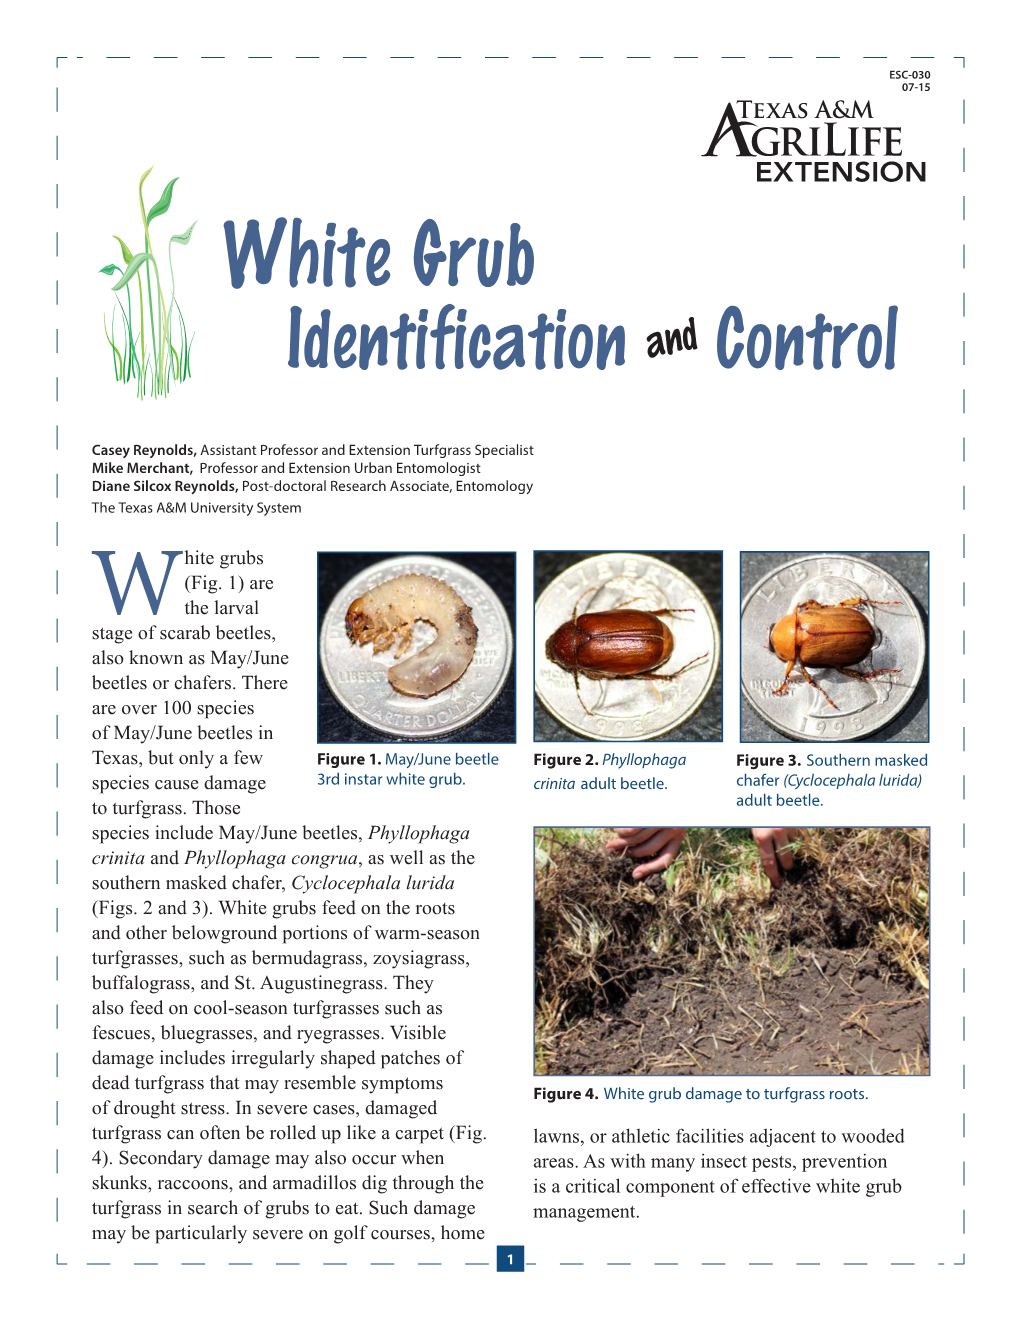 White Grub Identification and Control